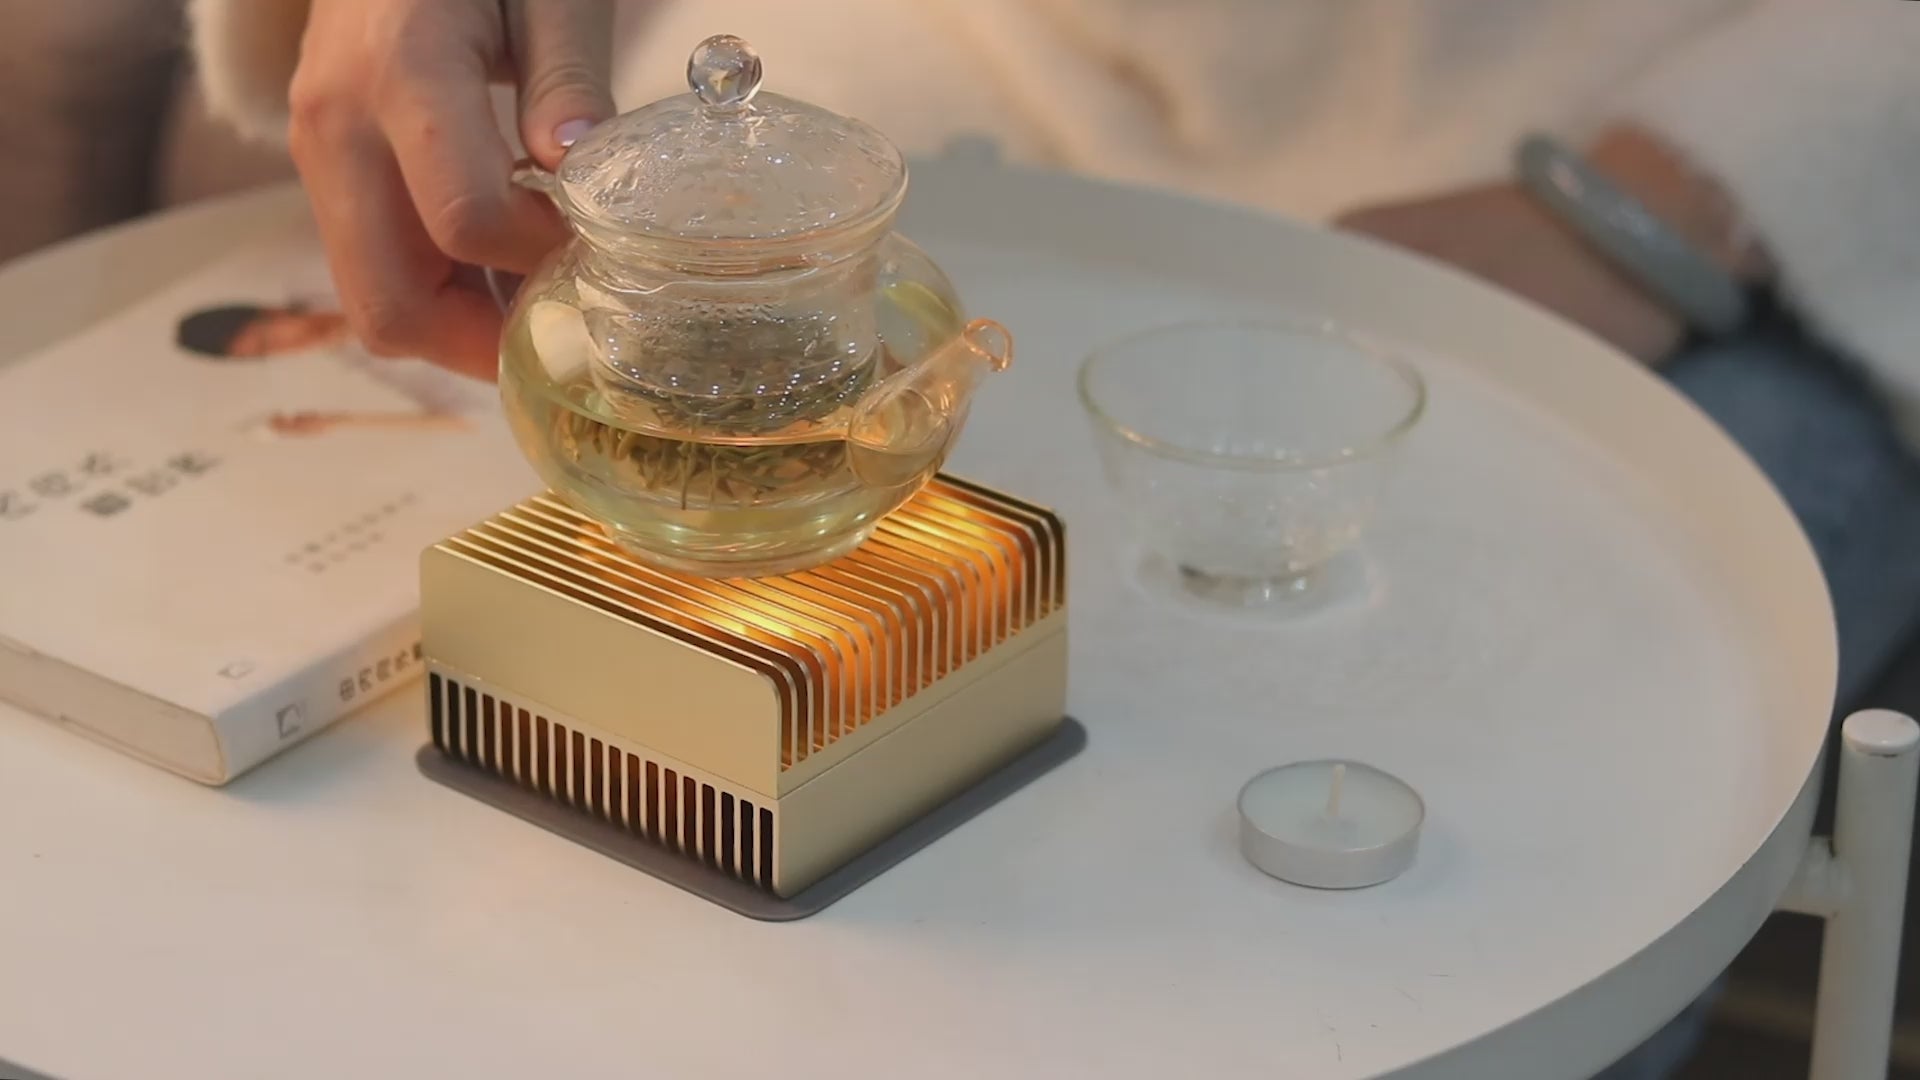 Universal Tea Warmer - Gold Aluminum Alloy Teapot Warmer Base for